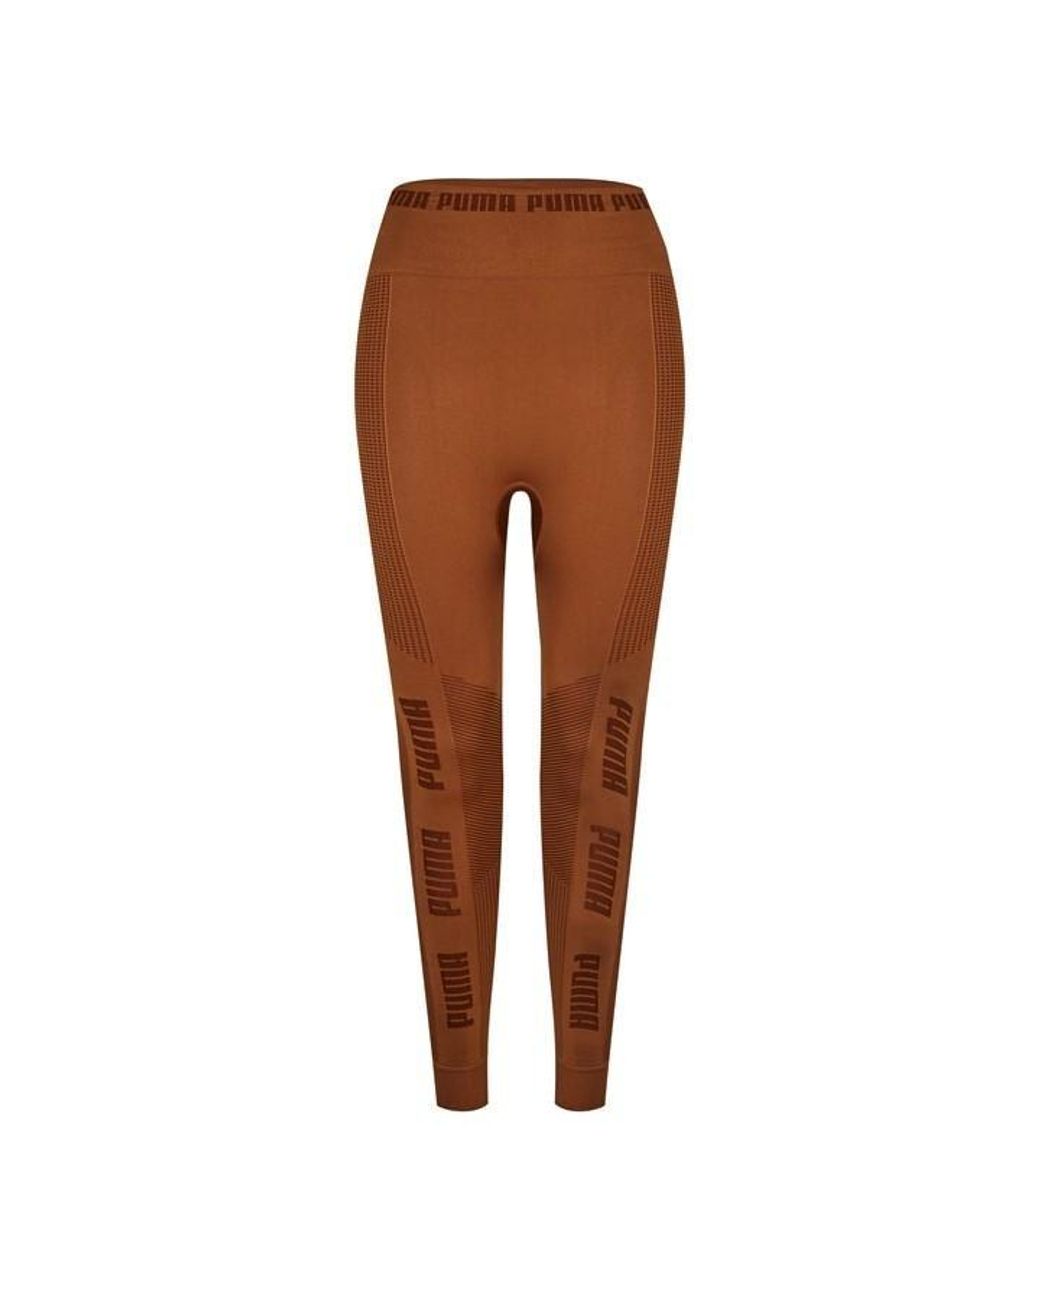 PUMA Evoknit Seamless leggings in Brown